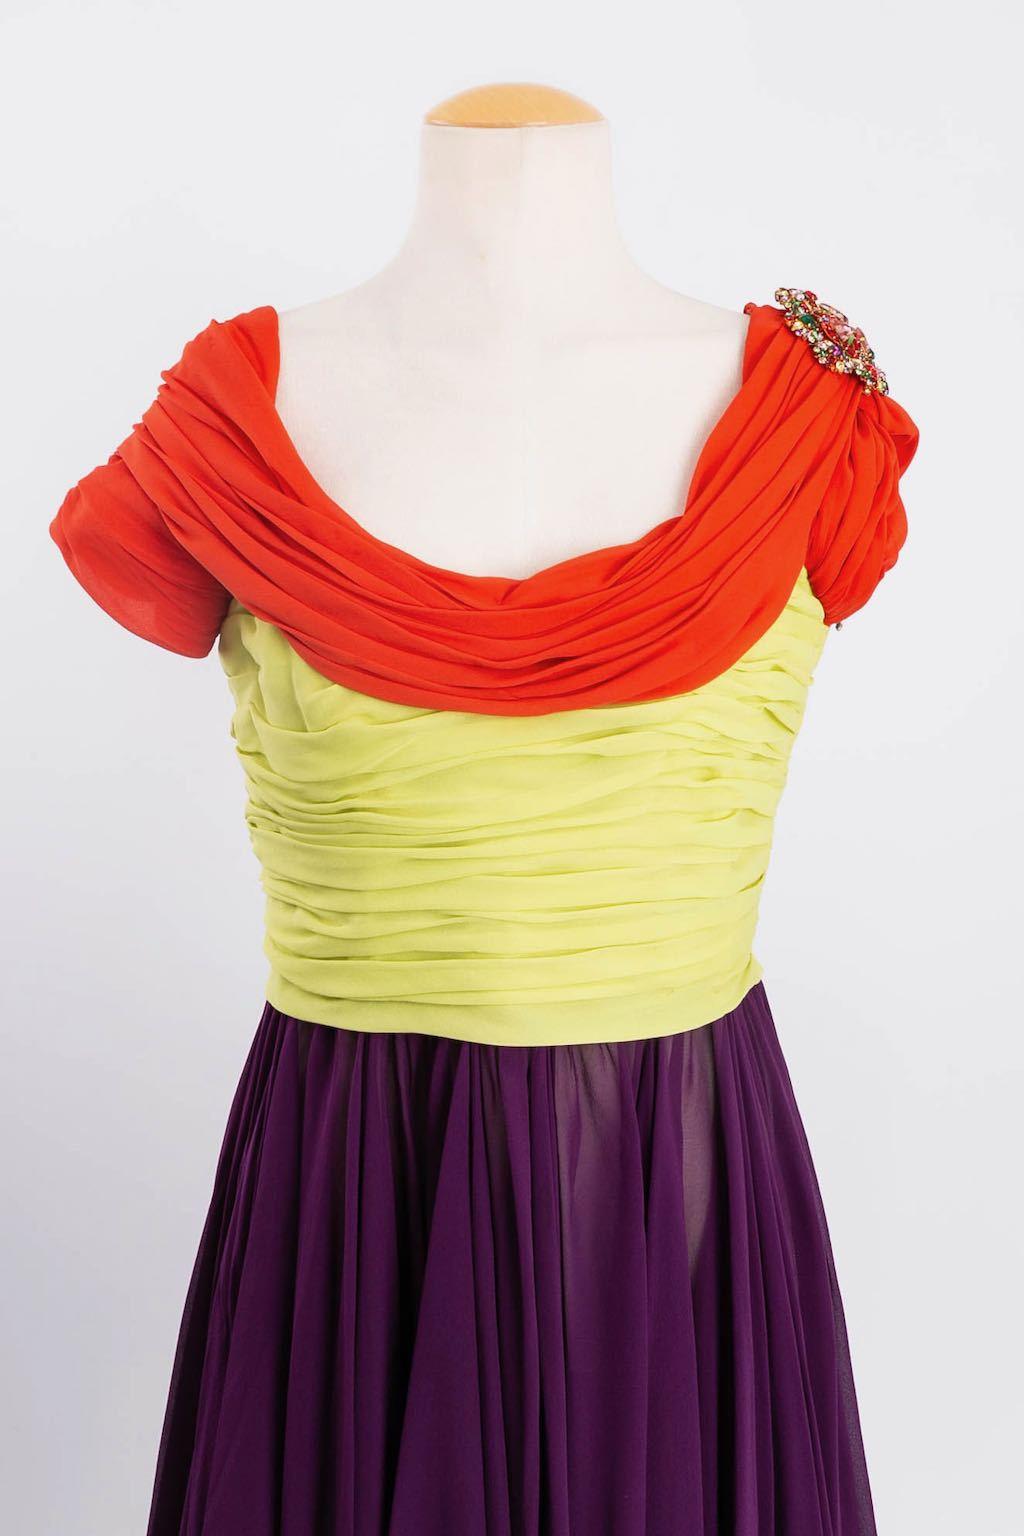 Christian Lacroix Haute Couture Chiffon Dress, Spring-Summer 1990  For Sale 2